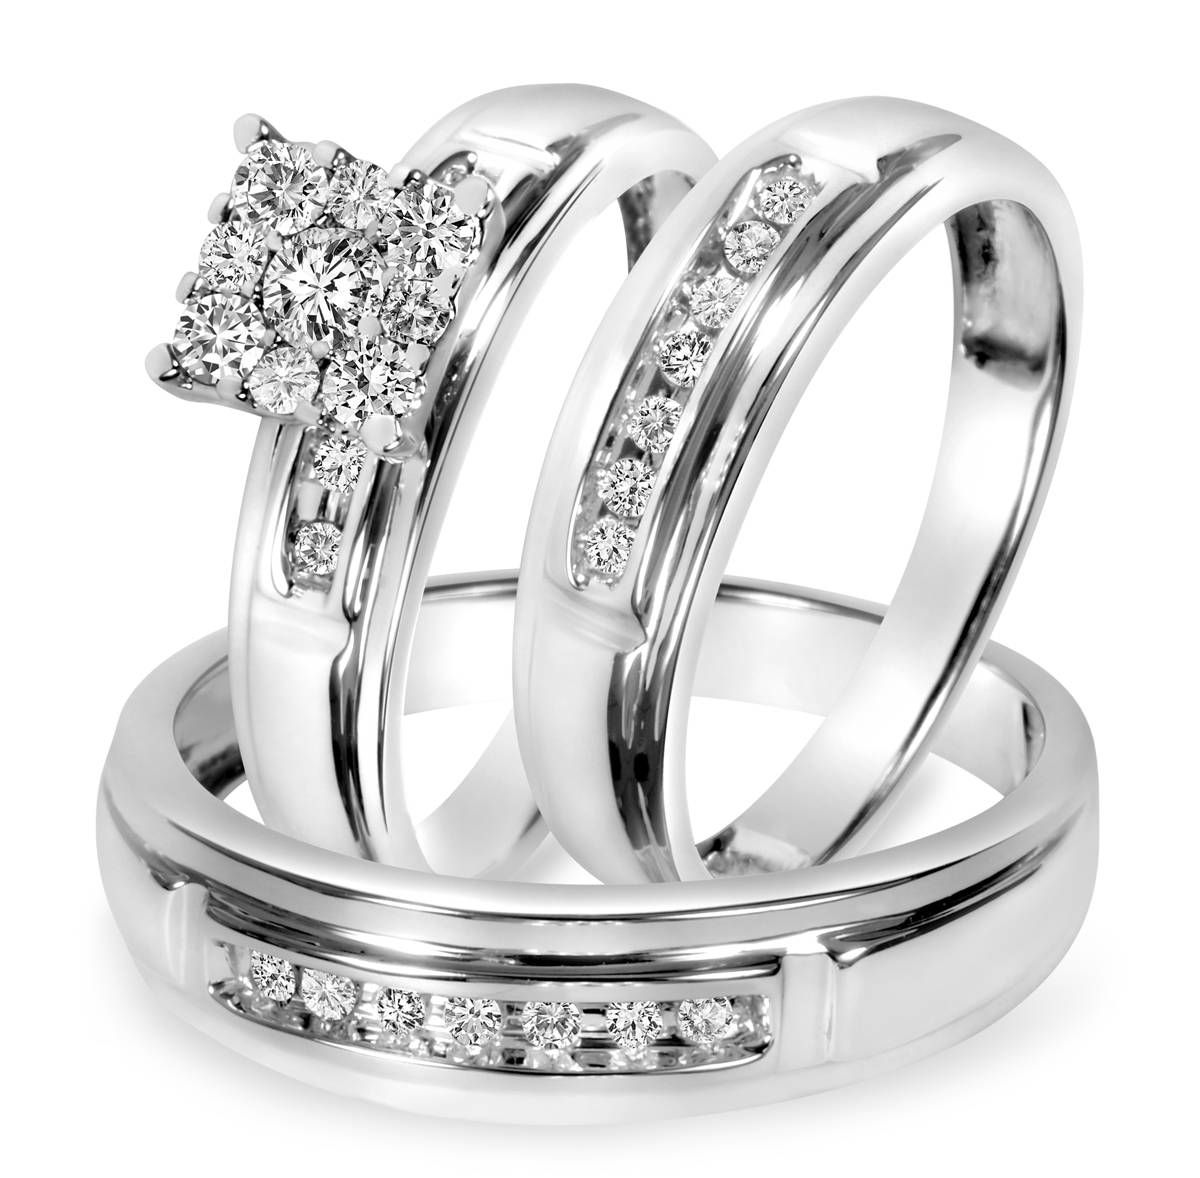 Engagement Rings : Solitaire Princess Cut Engagement Rings In Engagement Ring Sets Under  (View 10 of 15)